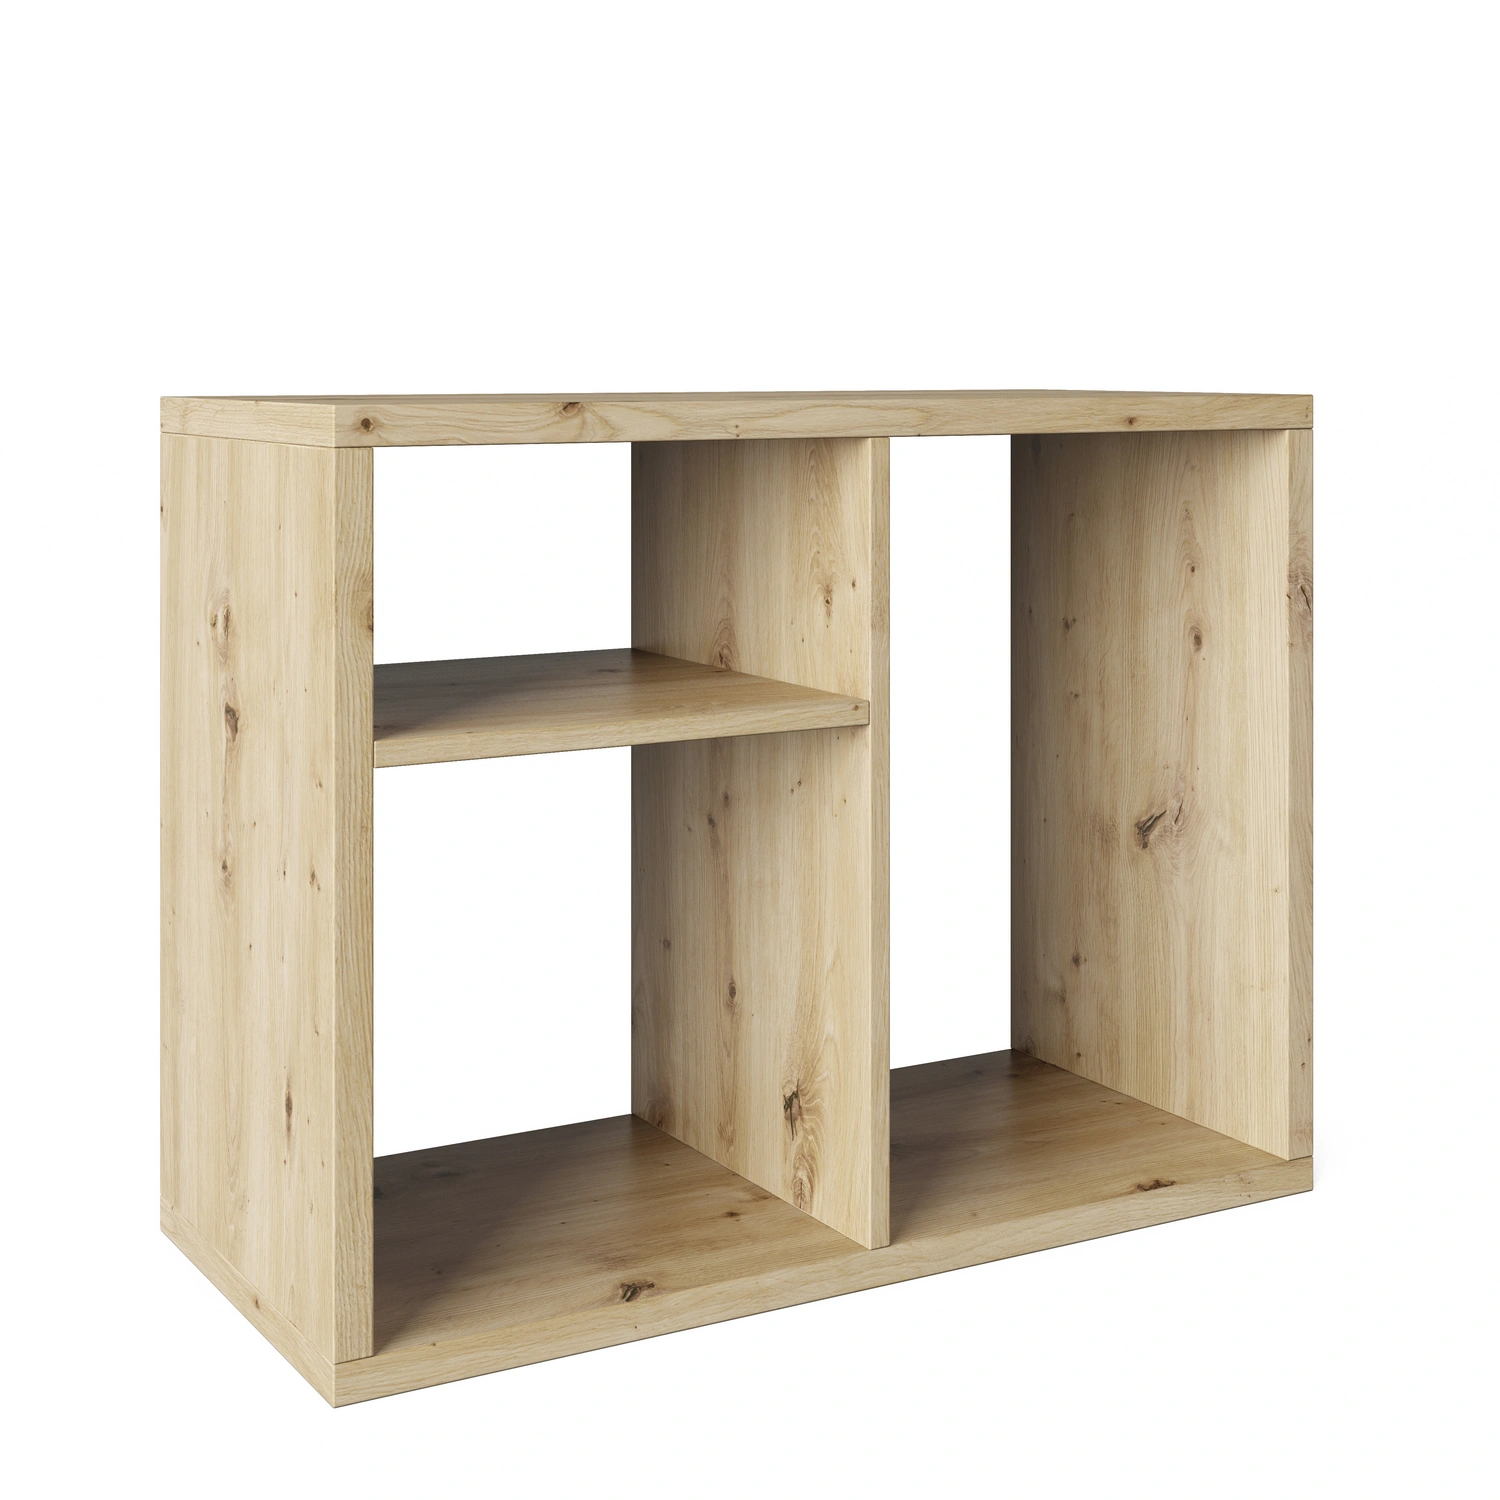 PHOENIX Raumteiler-Regal »Fortuna«, BxHxL: 75,1 x 57,9 x 34 cm, Holz | Regalsysteme